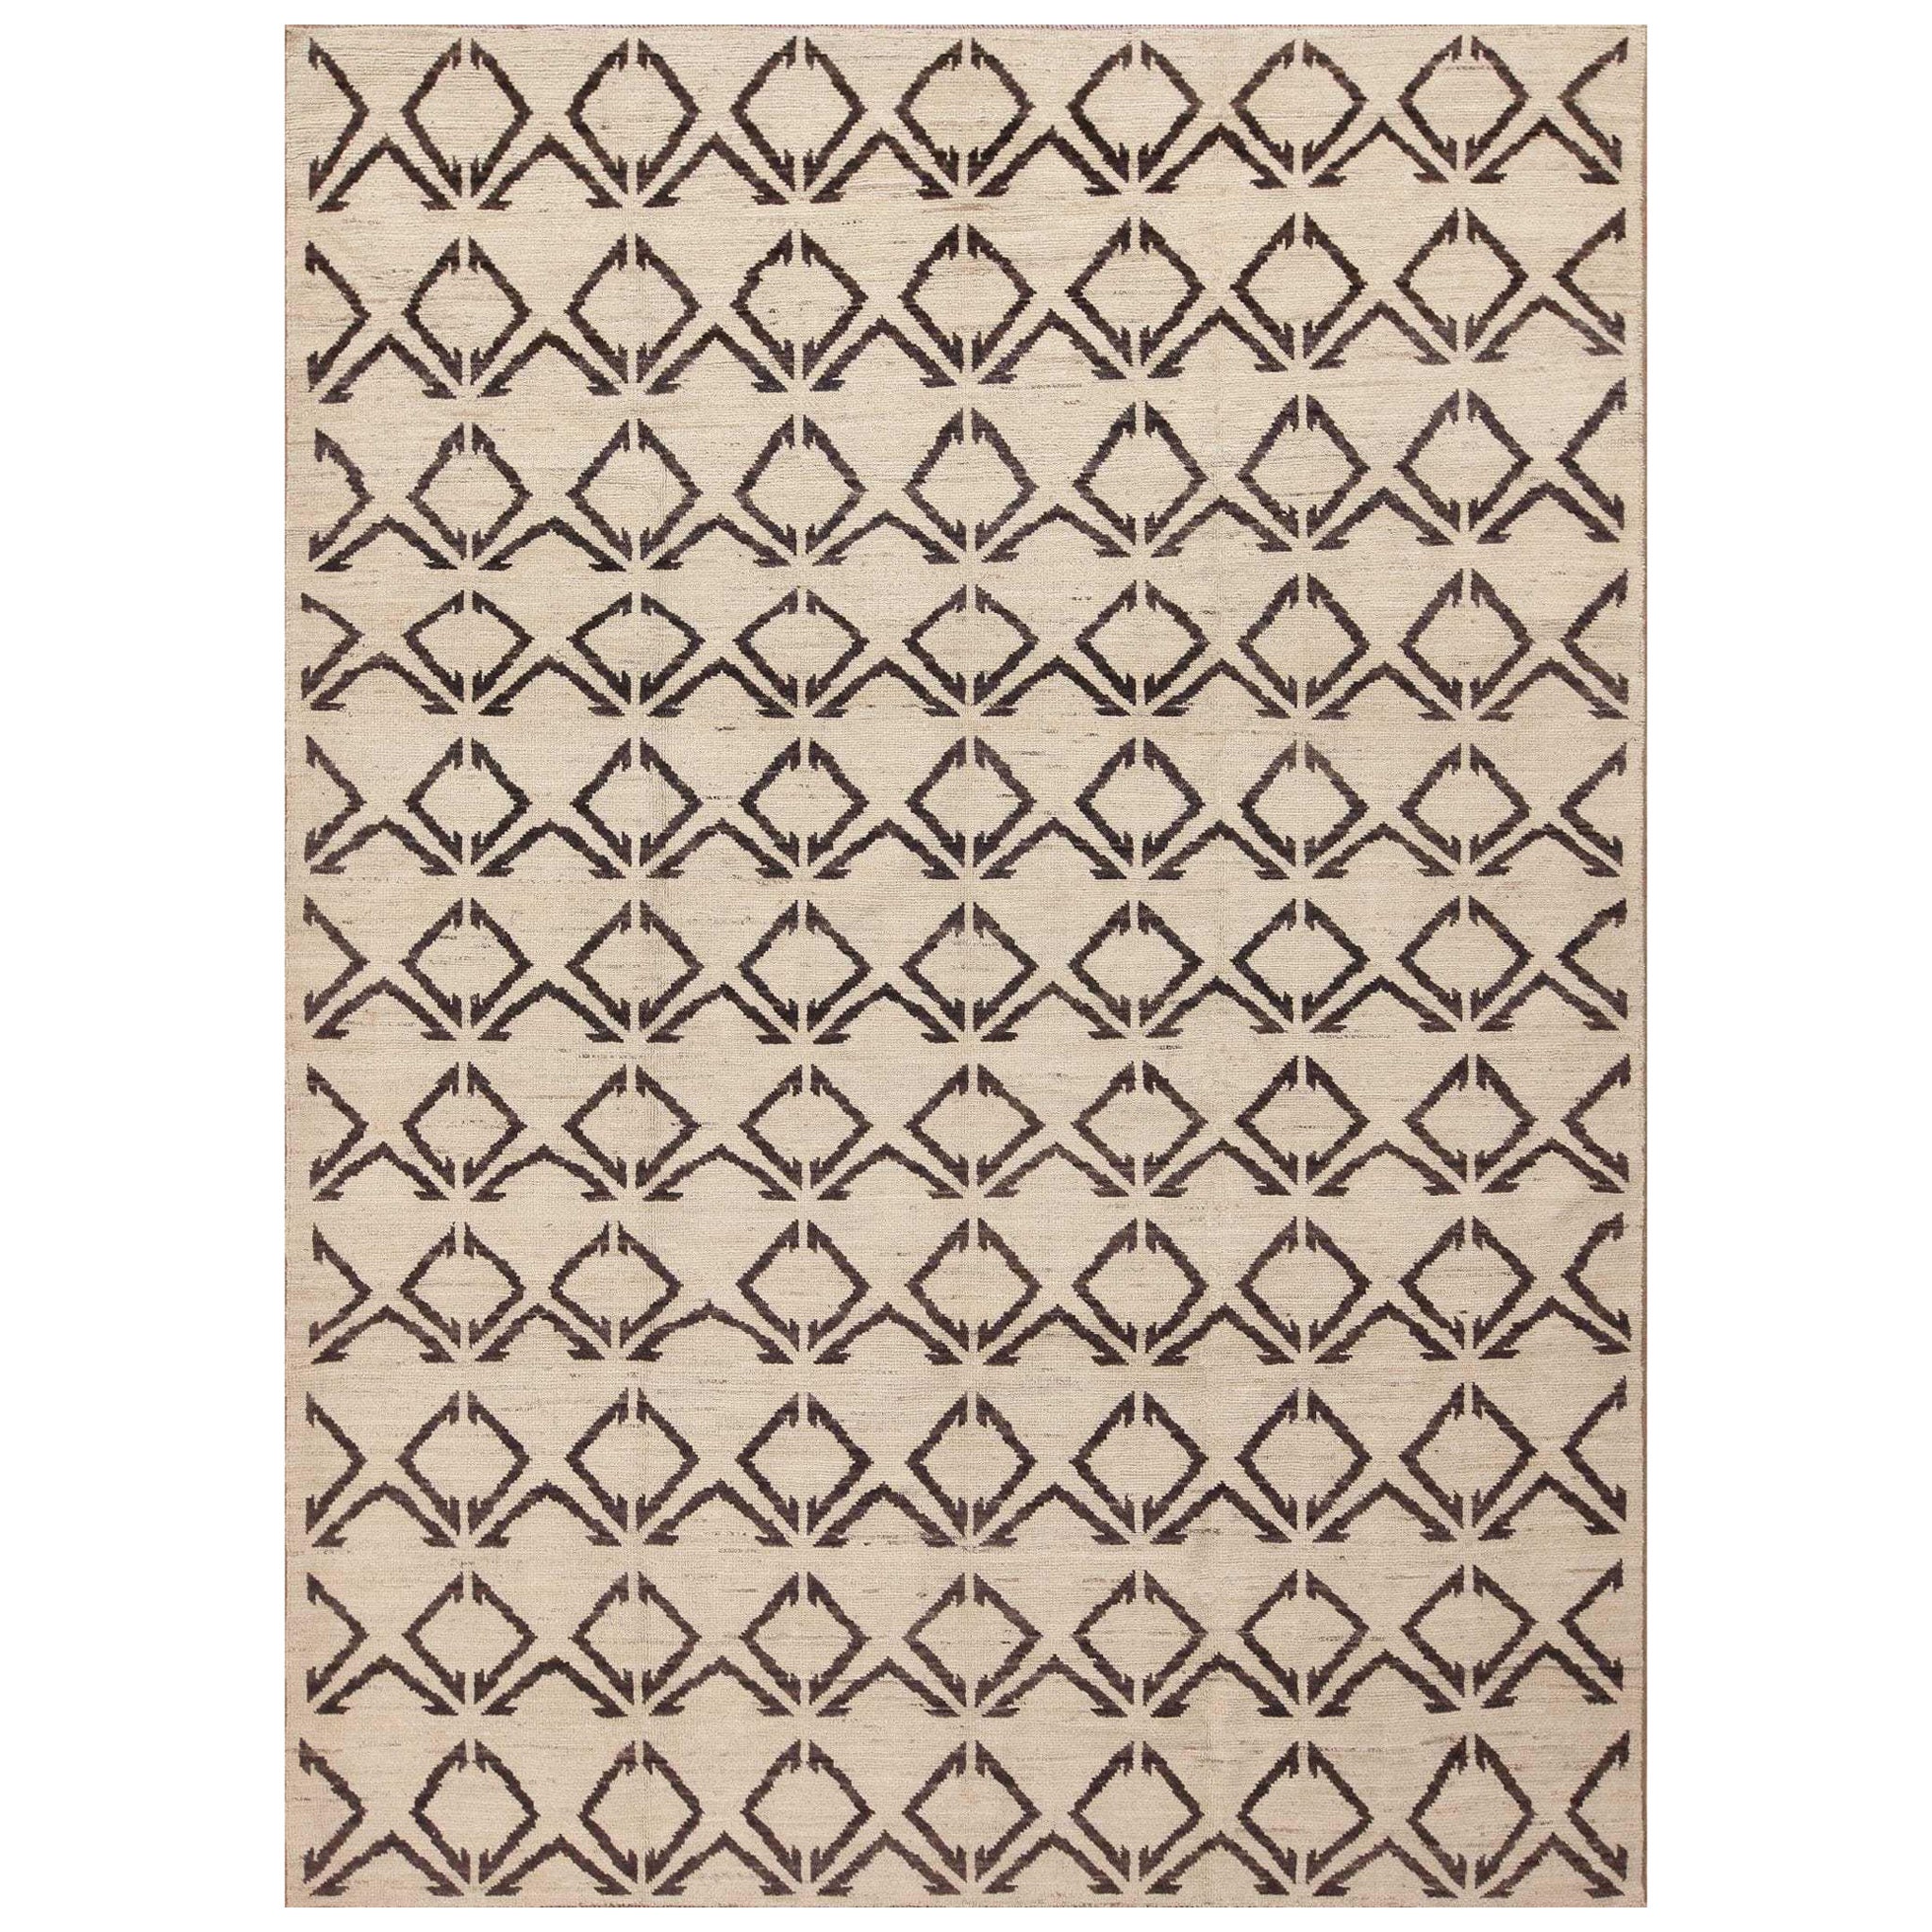 Collection Nazmiyal, marocaine berbère Beni Ourain, tapis moderne de 7'3" x 10'2"